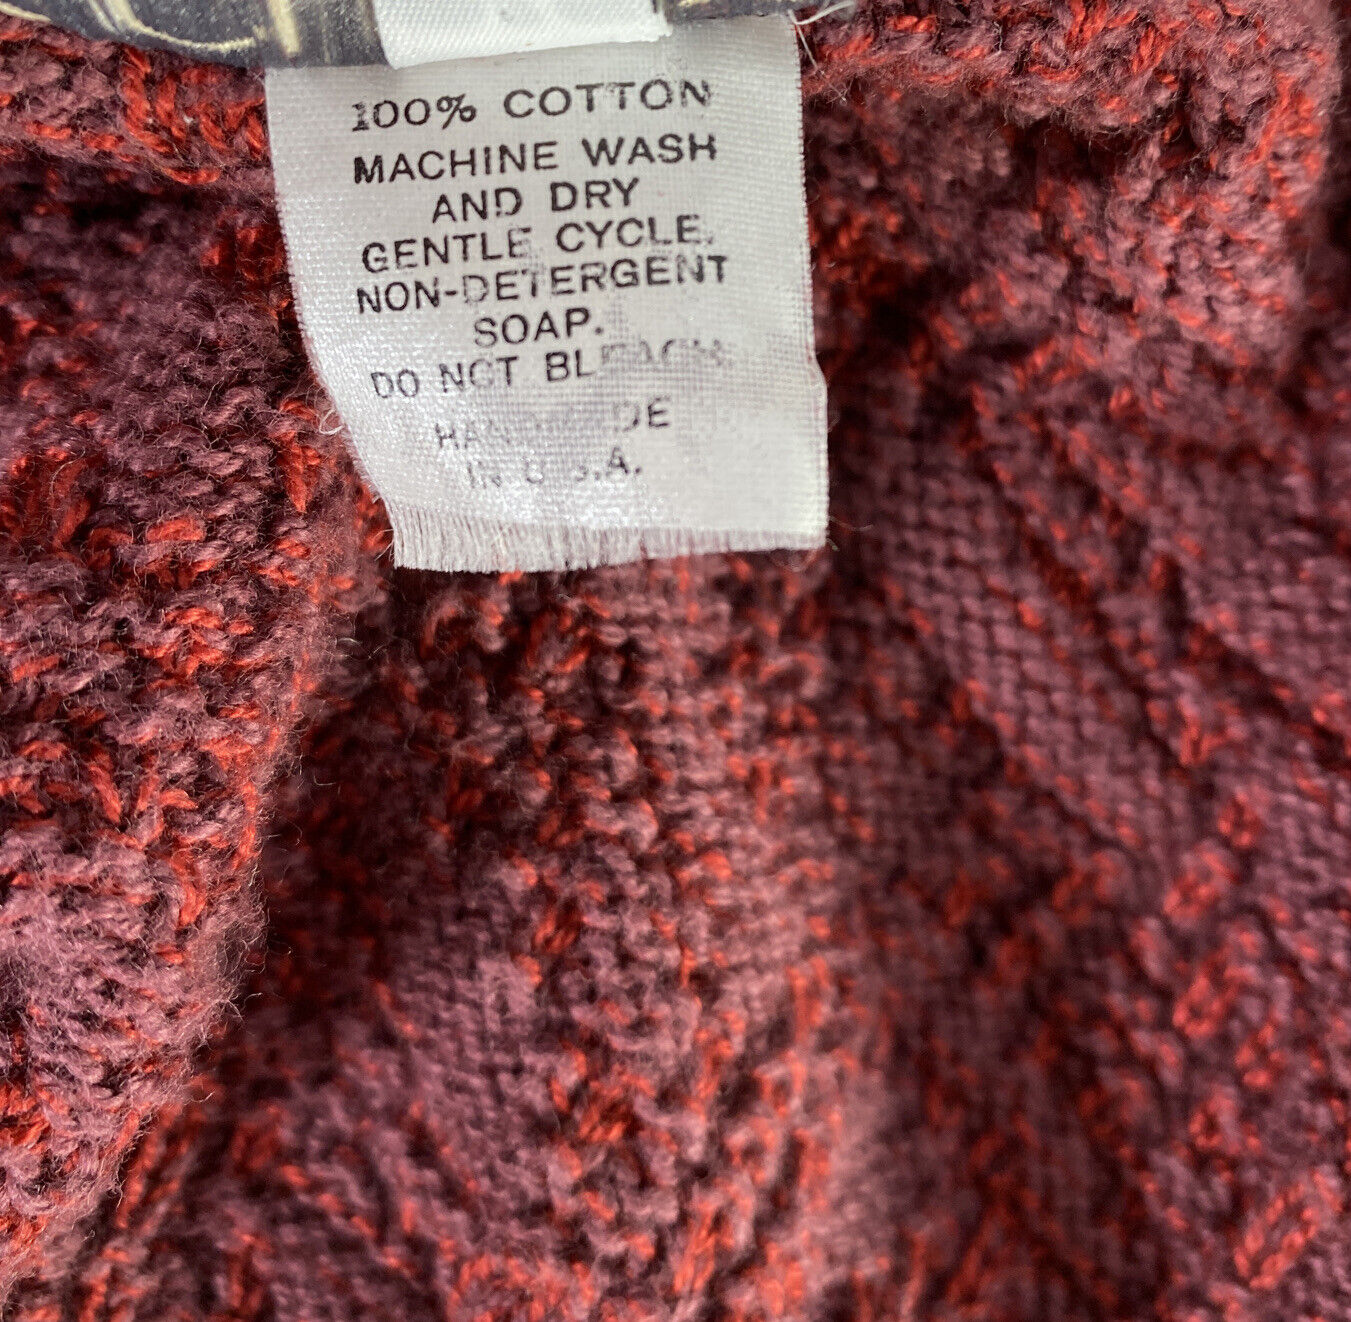 Chris Triola Women's Red Cotton Open Cardigan Sweater - M